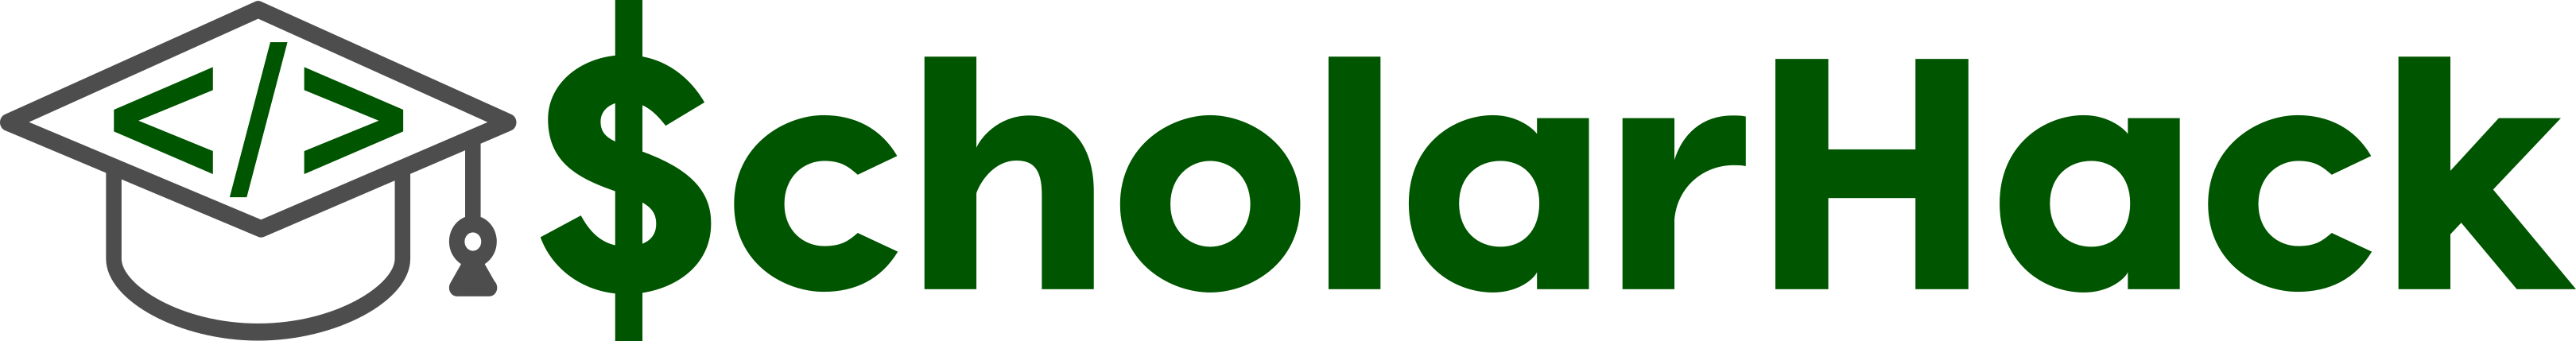 CoderVets logo